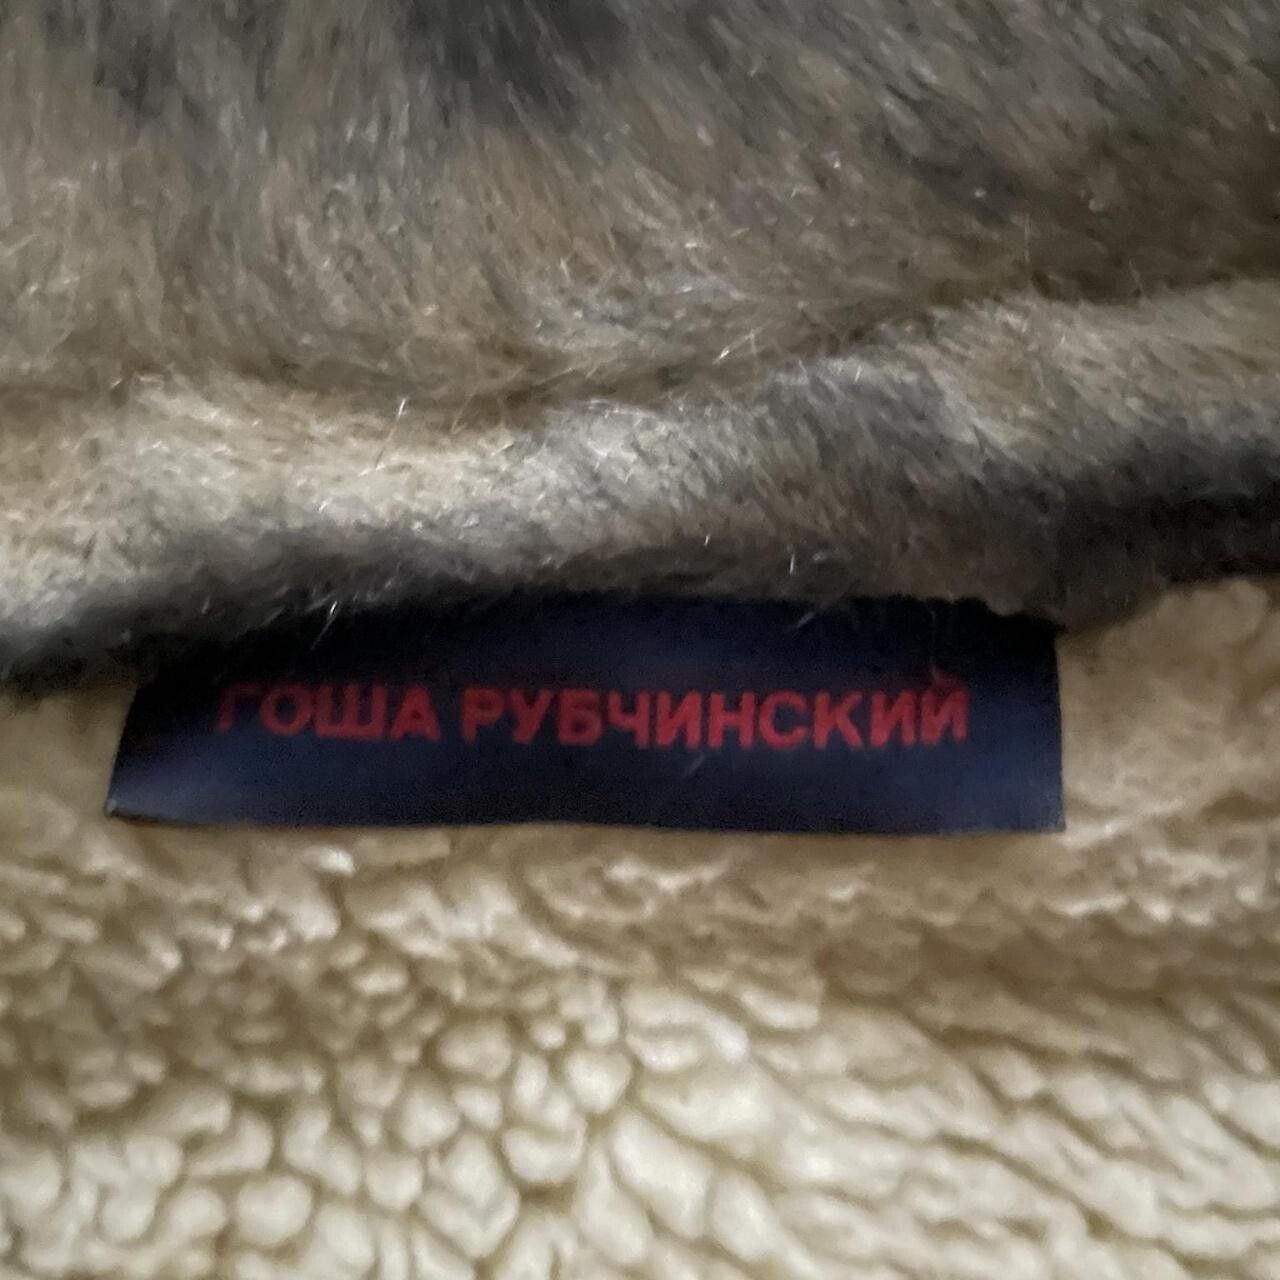 Gosha Rubchinskiy Faux Fur FW15 Coat - 4